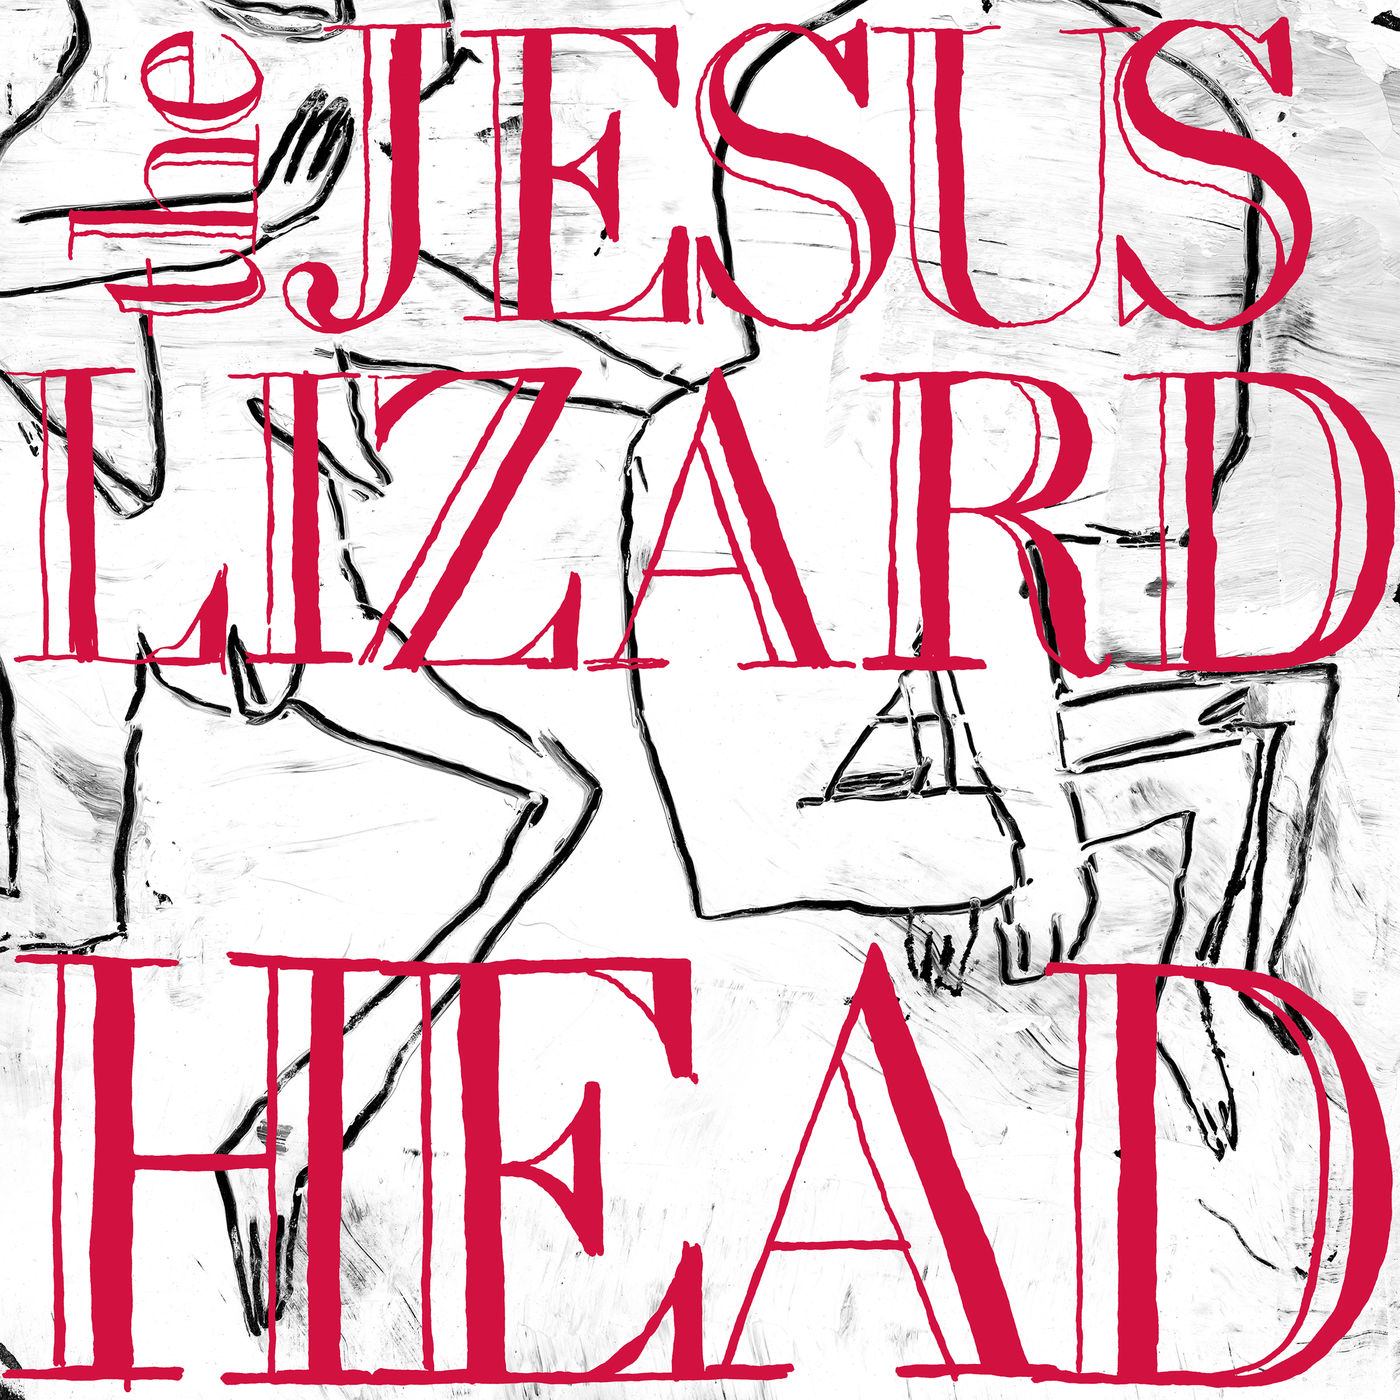 THE JESUS LIZARD - Head cover 